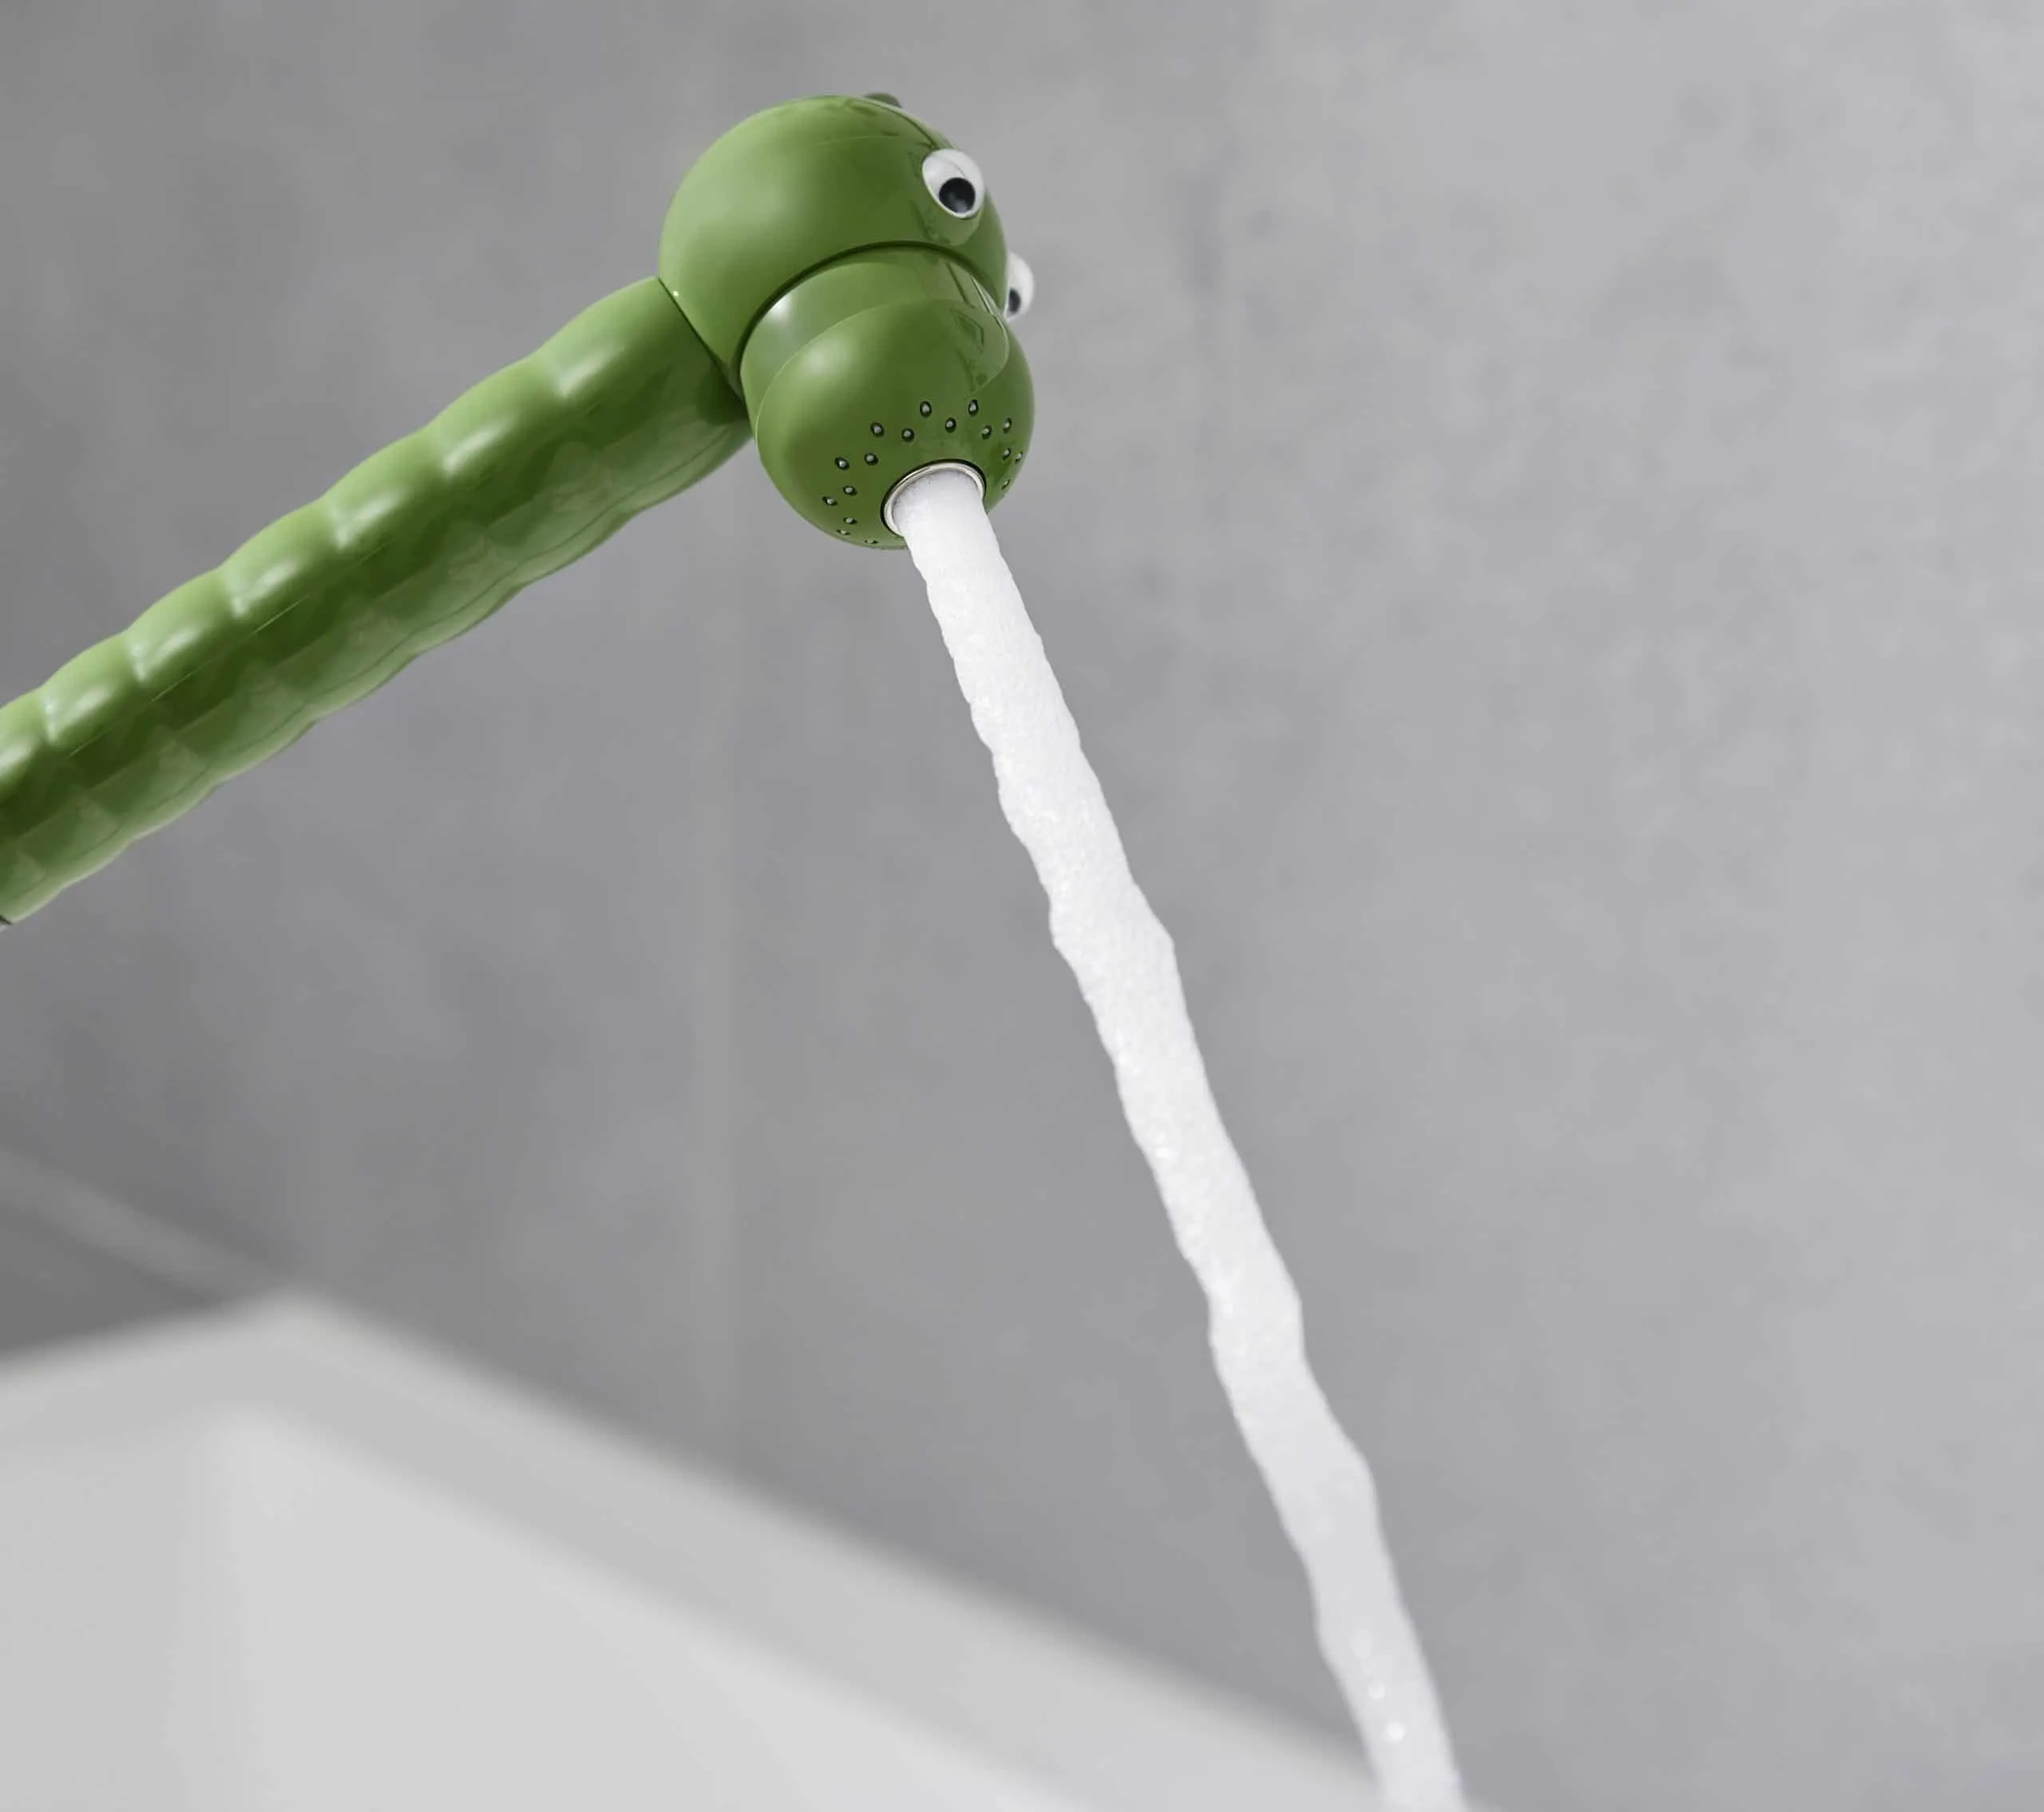 hansgrohe jocolino showers in green colour